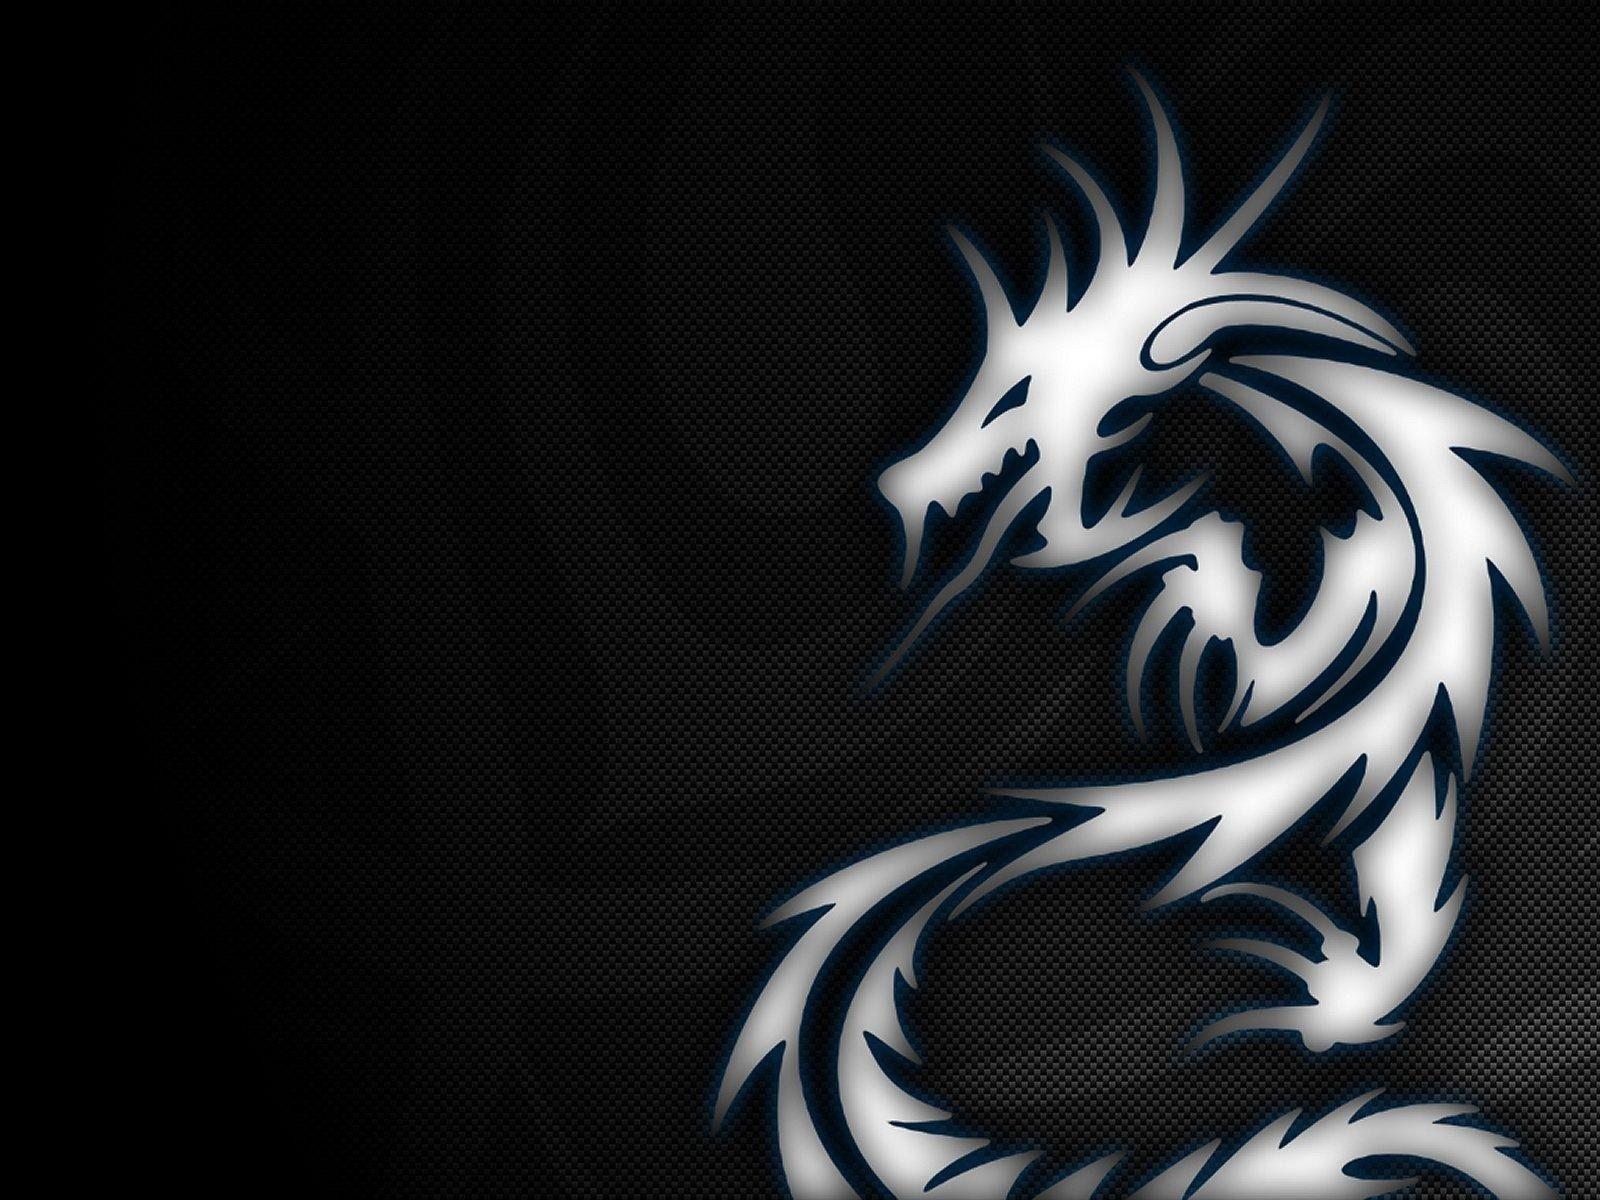 dragon desktop wallpaper. Image And Wallpaper